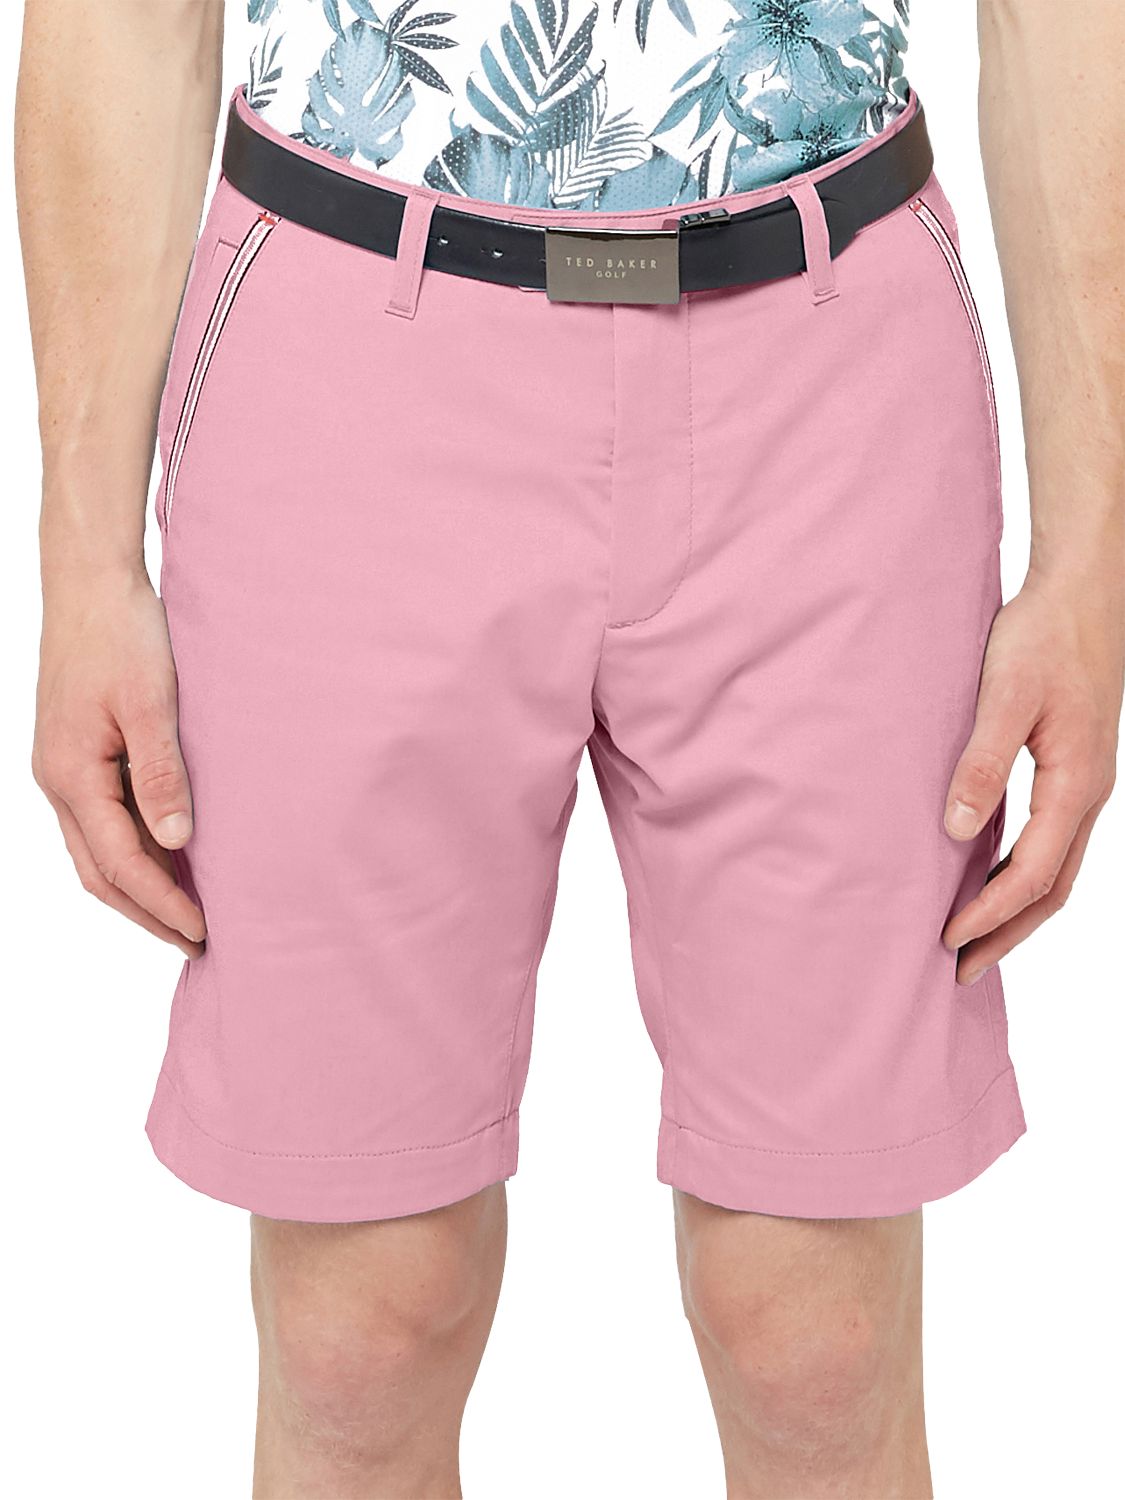 Ted Baker Drivran Shorts, Light Pink, 36R